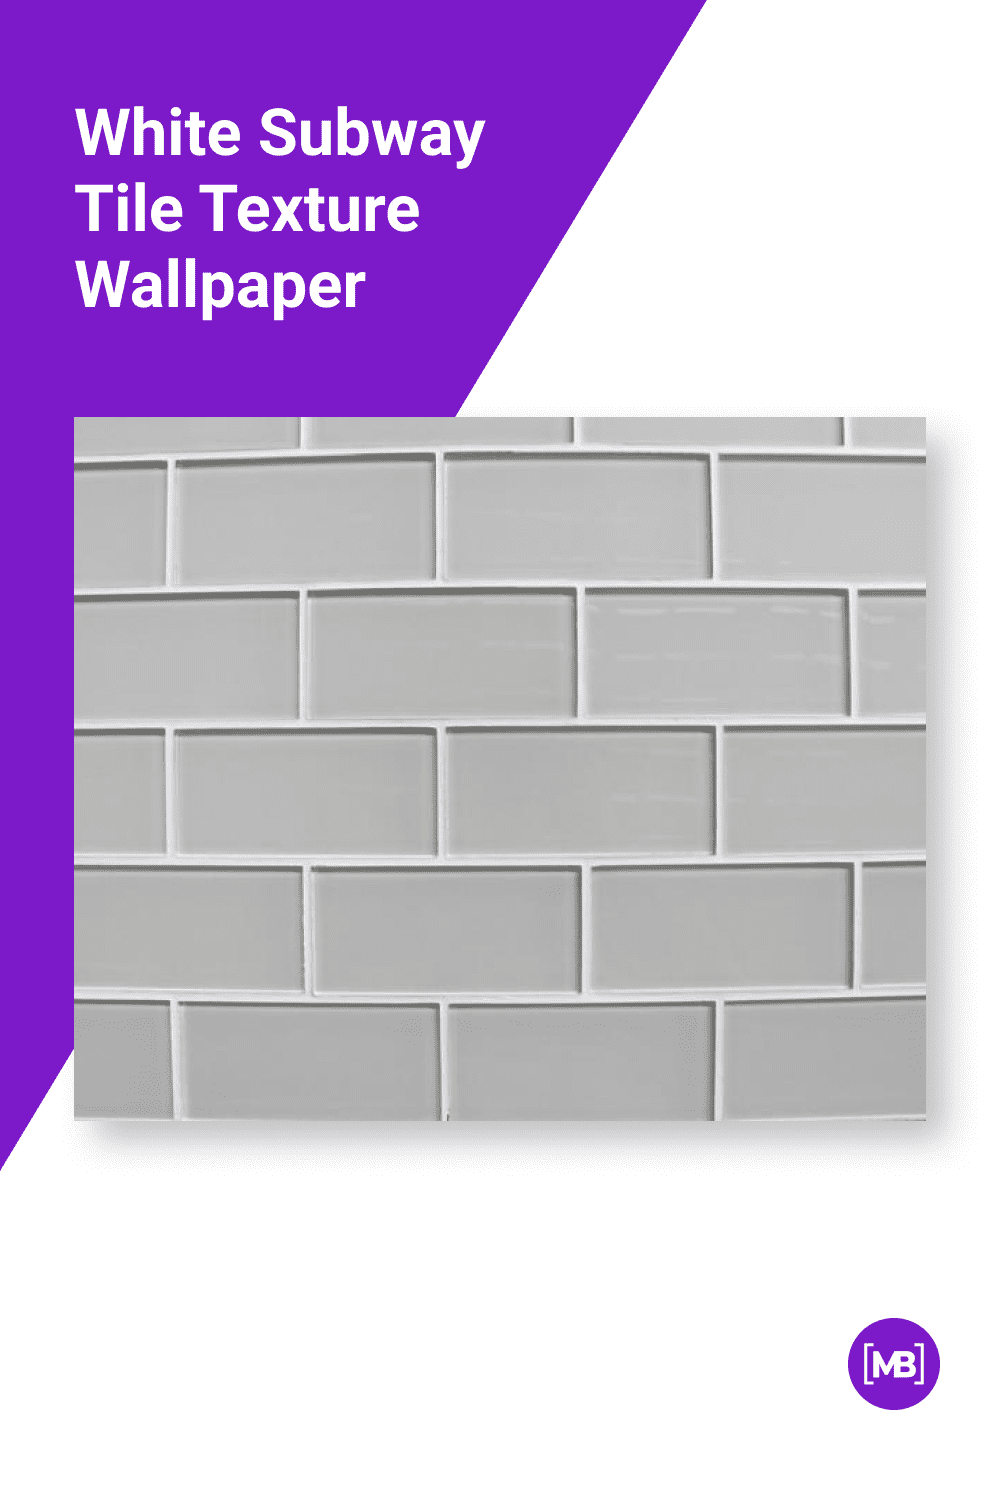 White subway tile texture wallpaper.